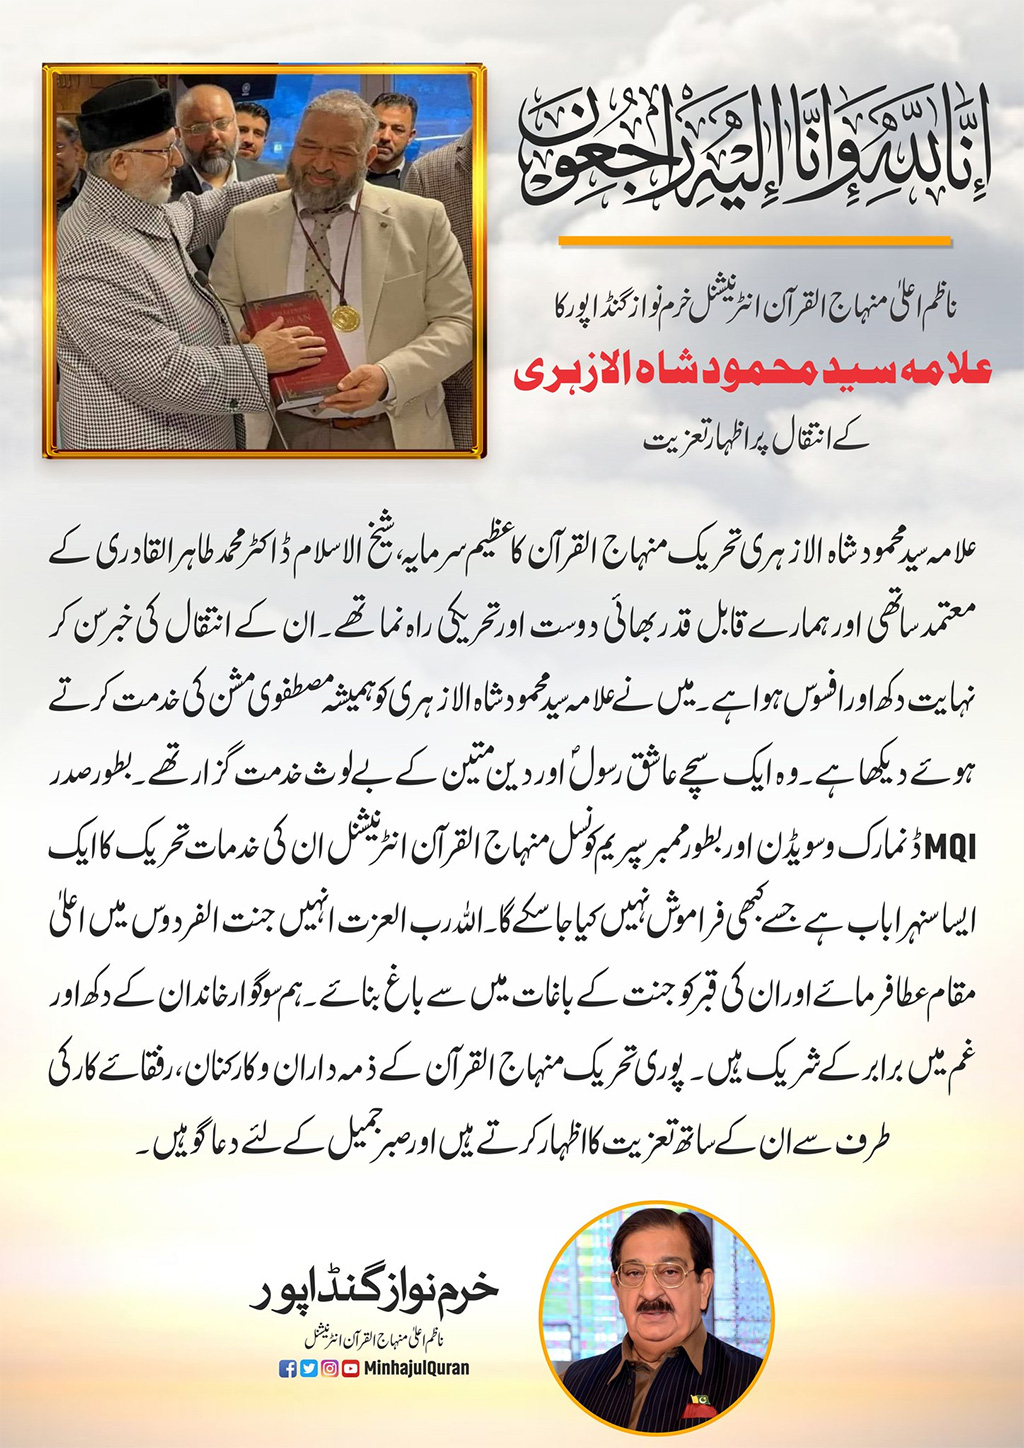 Khurram Nawaz expressed his condolences on death syed Mehmood Shah